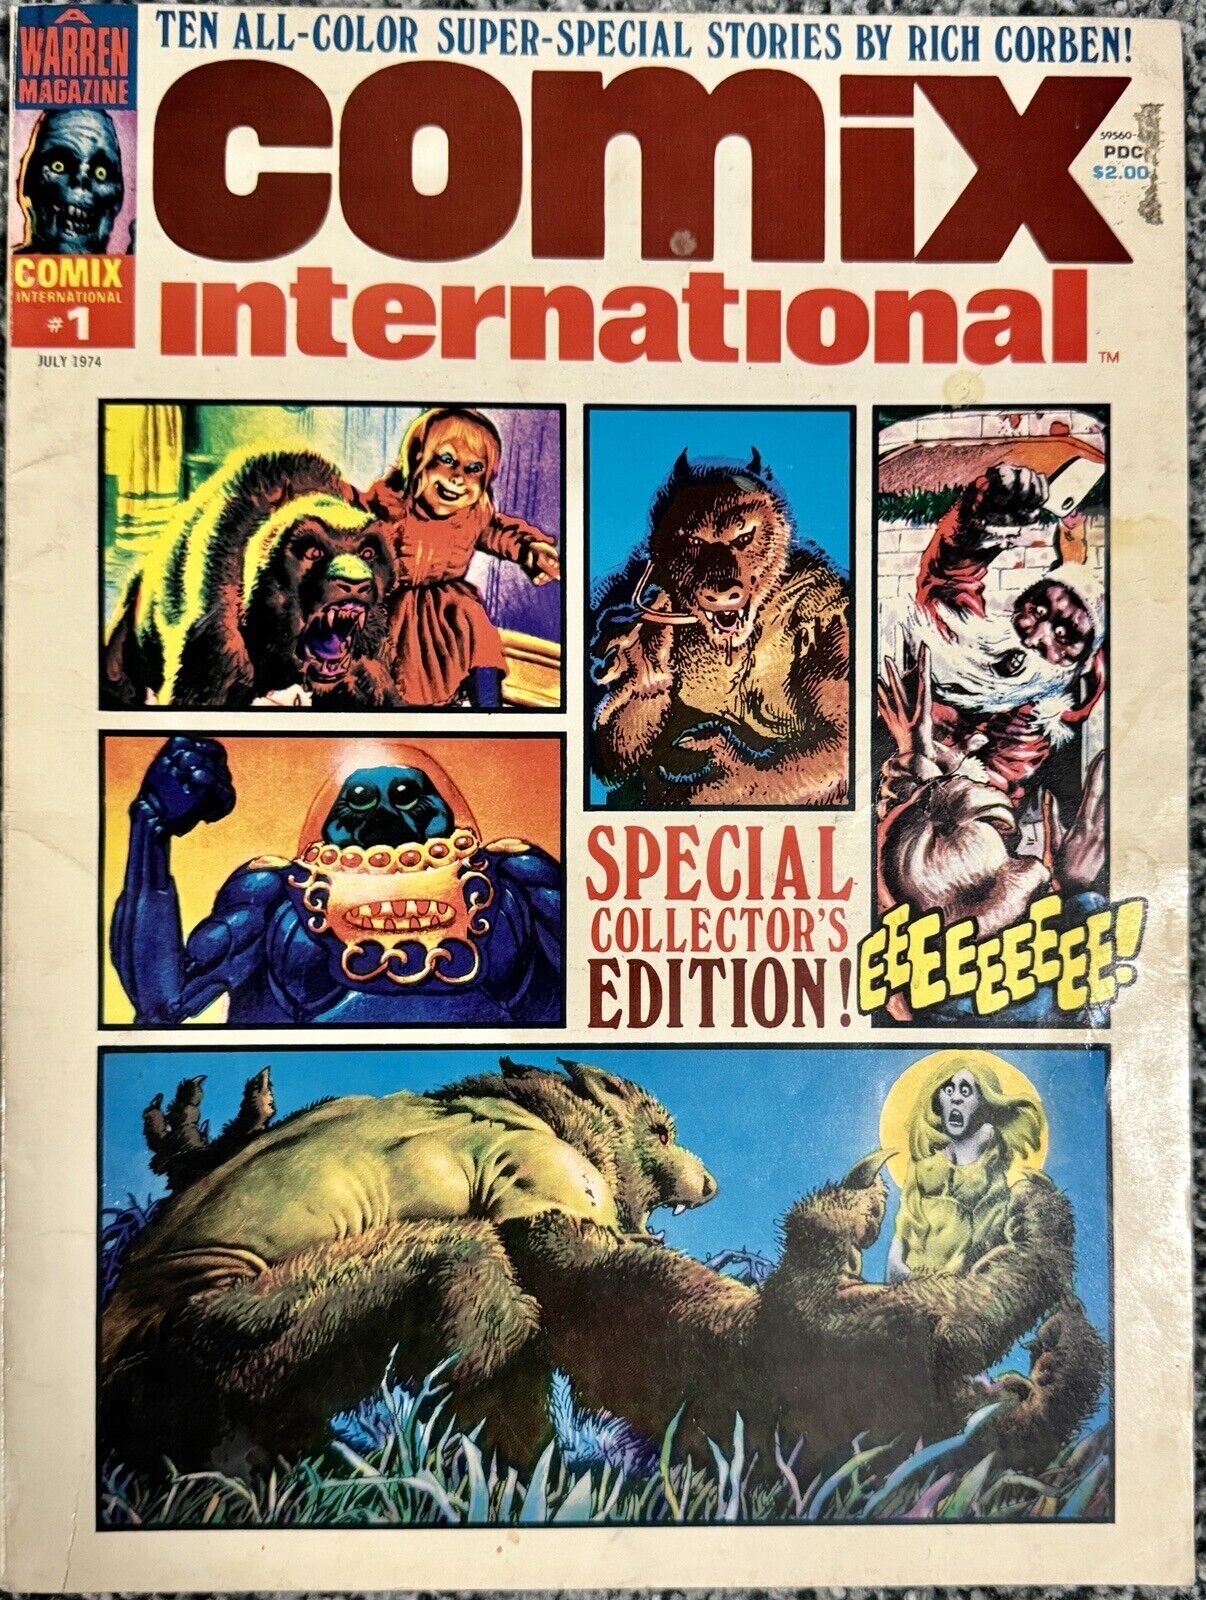 COMIX INTERNATIONAL #1 (Warren 1974) 10 CORBEN STORIES VG+ Color Rare Magazine